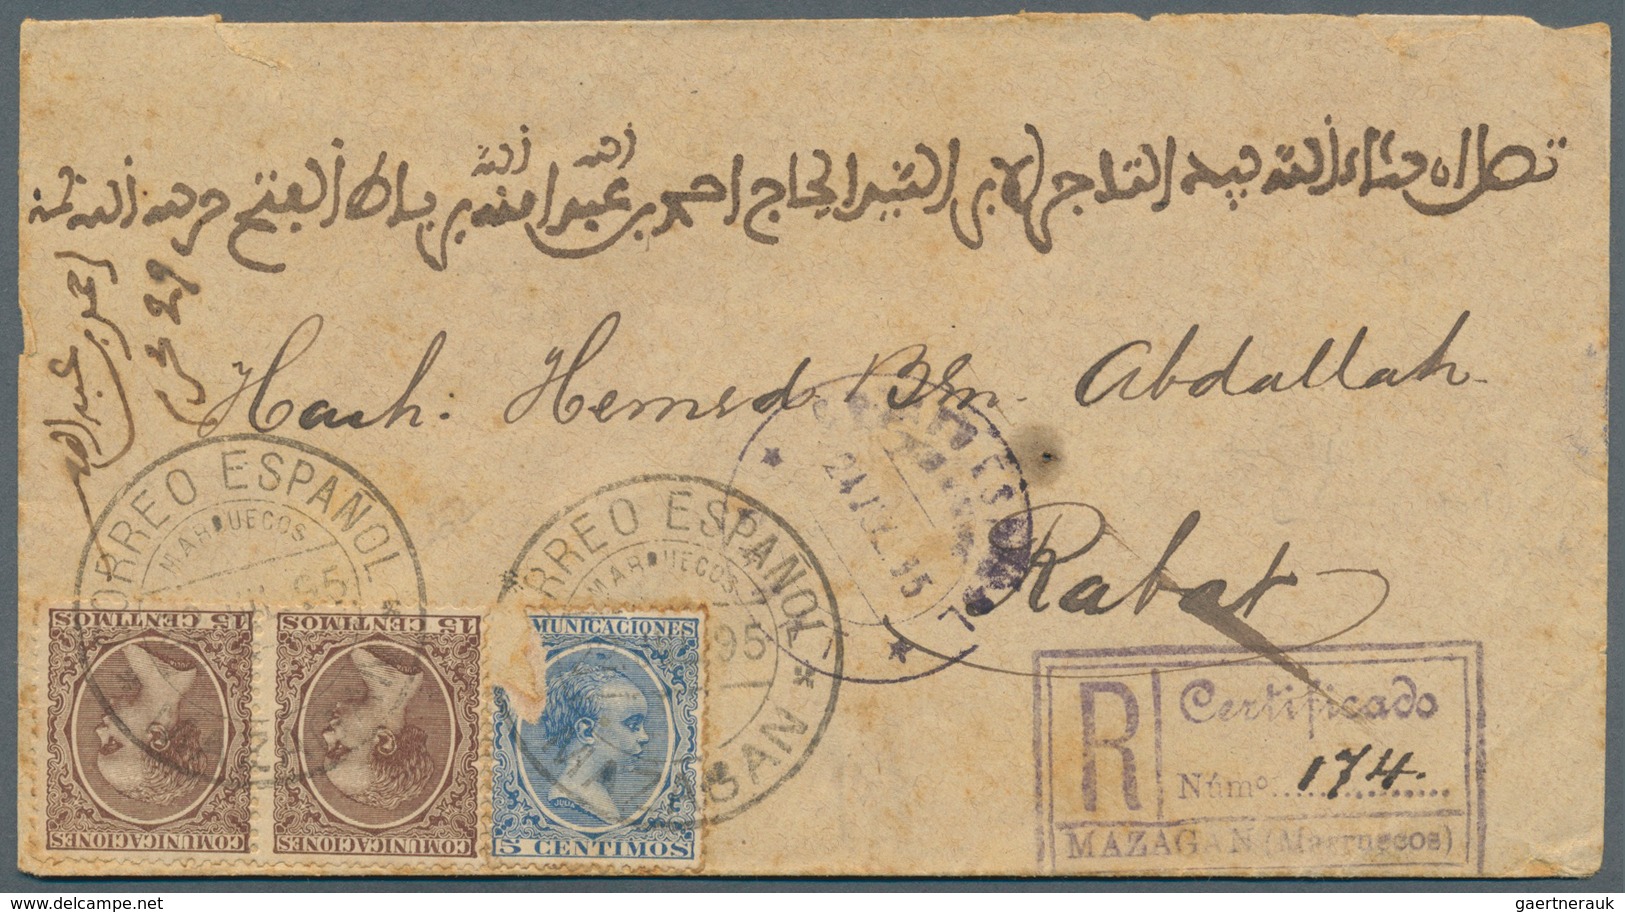 Spanisch-Marokko: 1895. Registered Envelope (backflap Partly Missing) Bearing Spain Yvert 198, 5c Bl - Spaans-Marokko